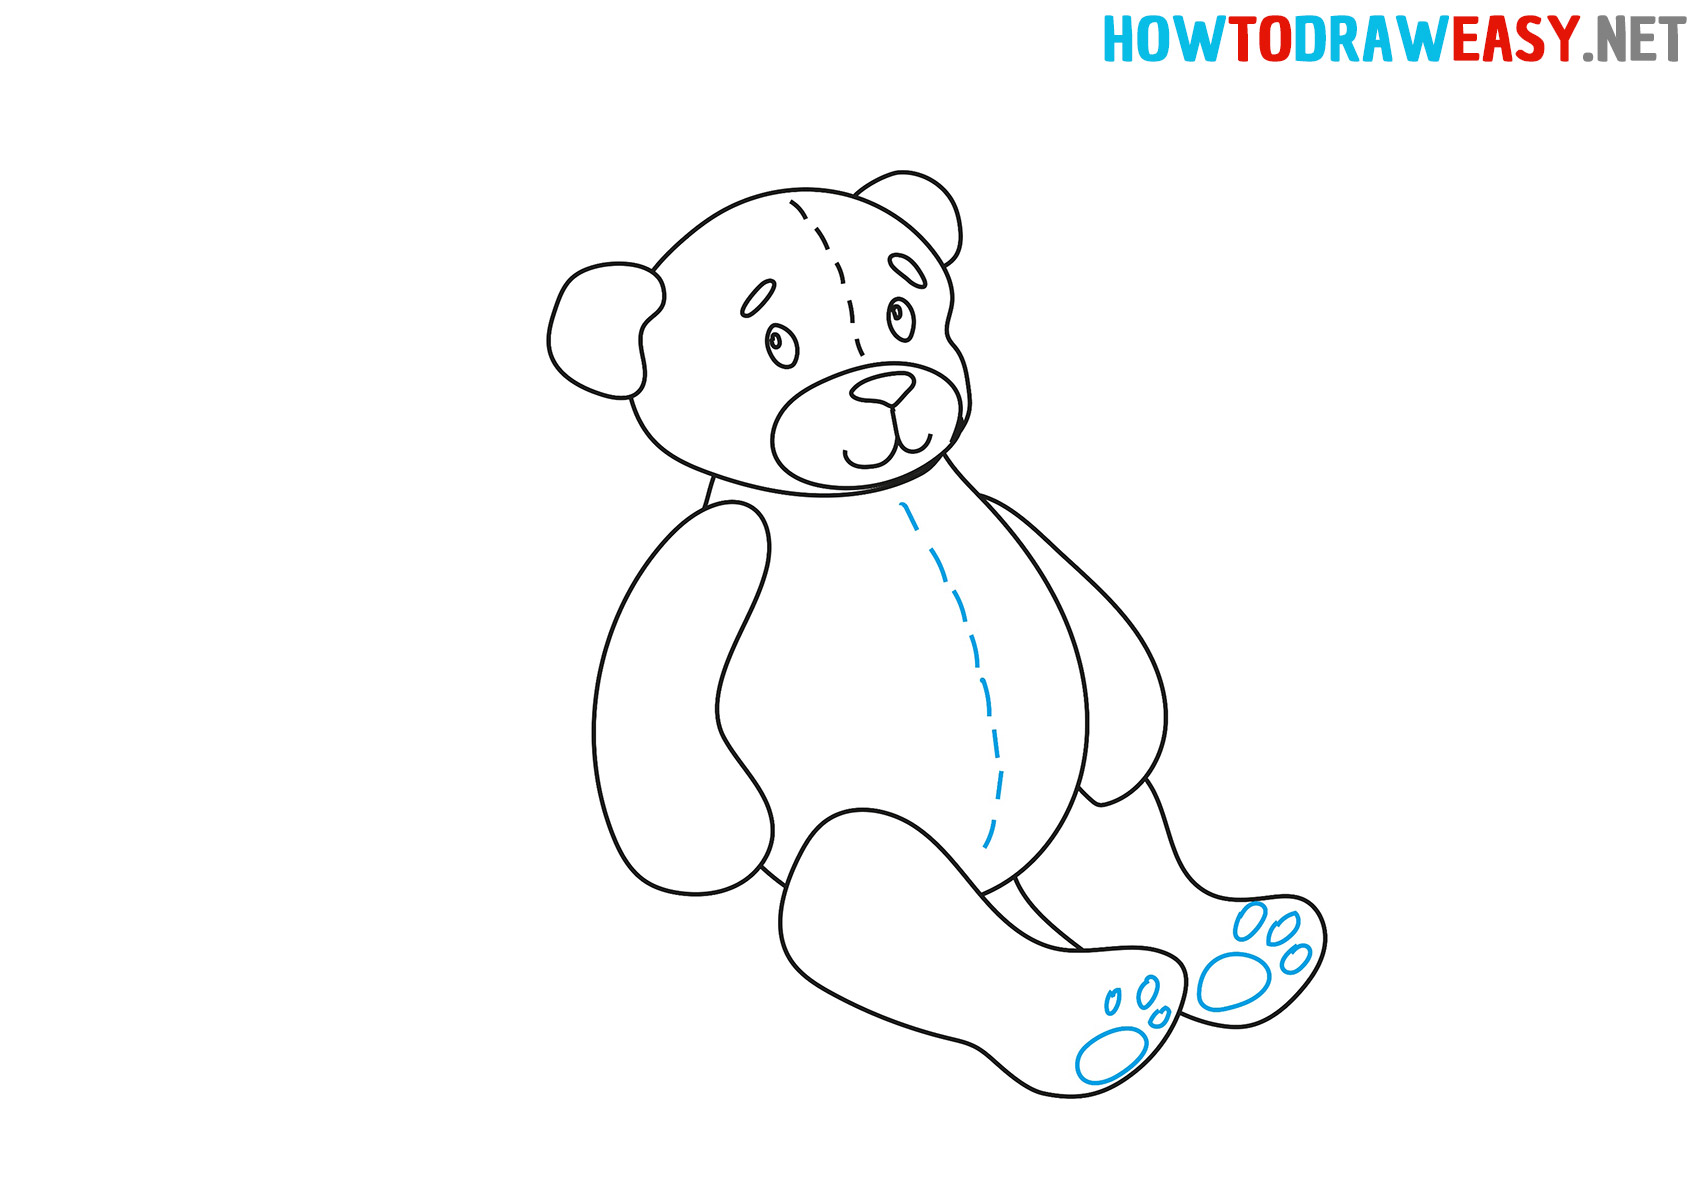 How to Draw a Simple Teddy Bear